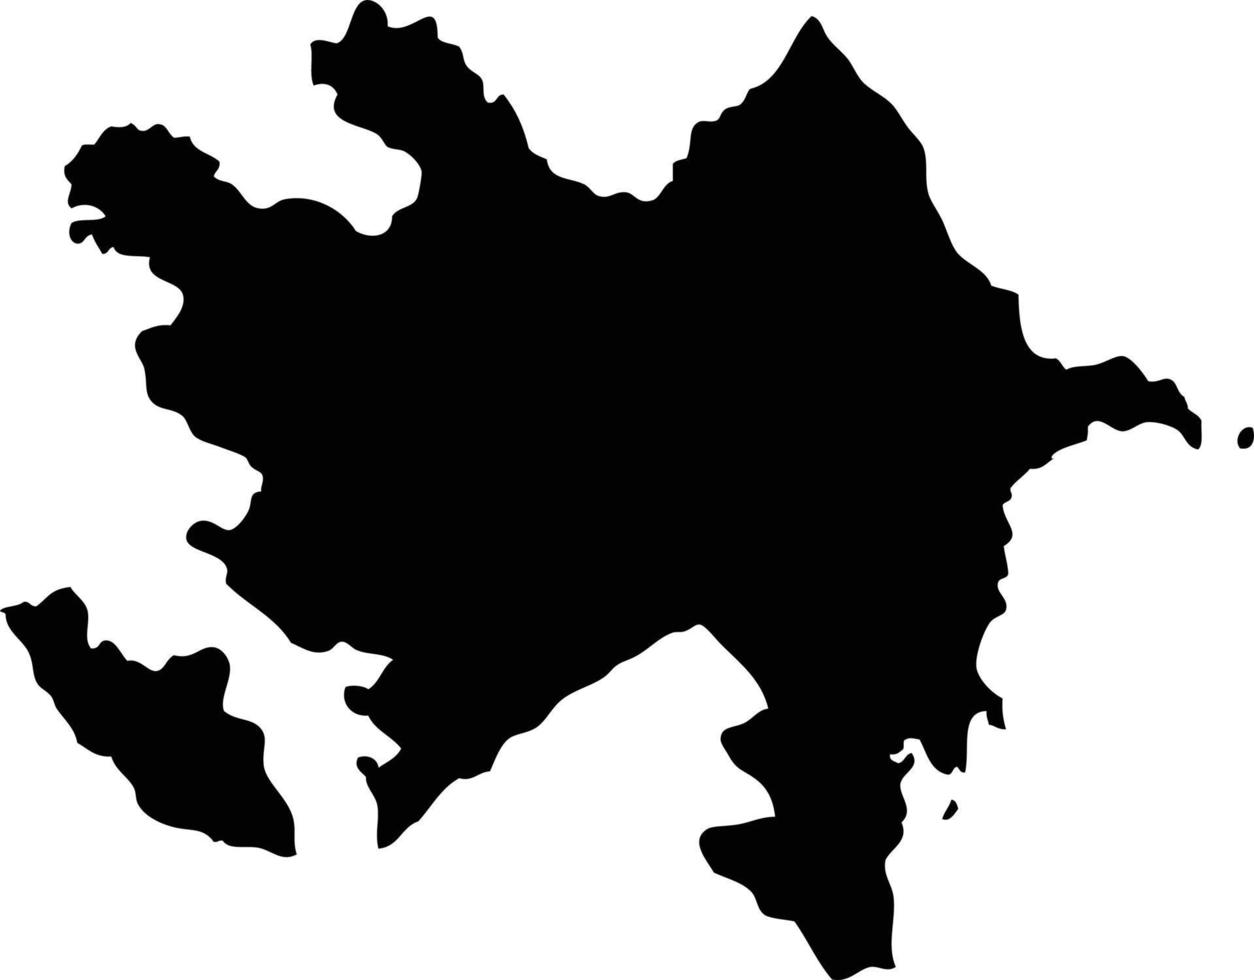 Asia Azerbaijan  vector map.Hand drawn minimalism style.